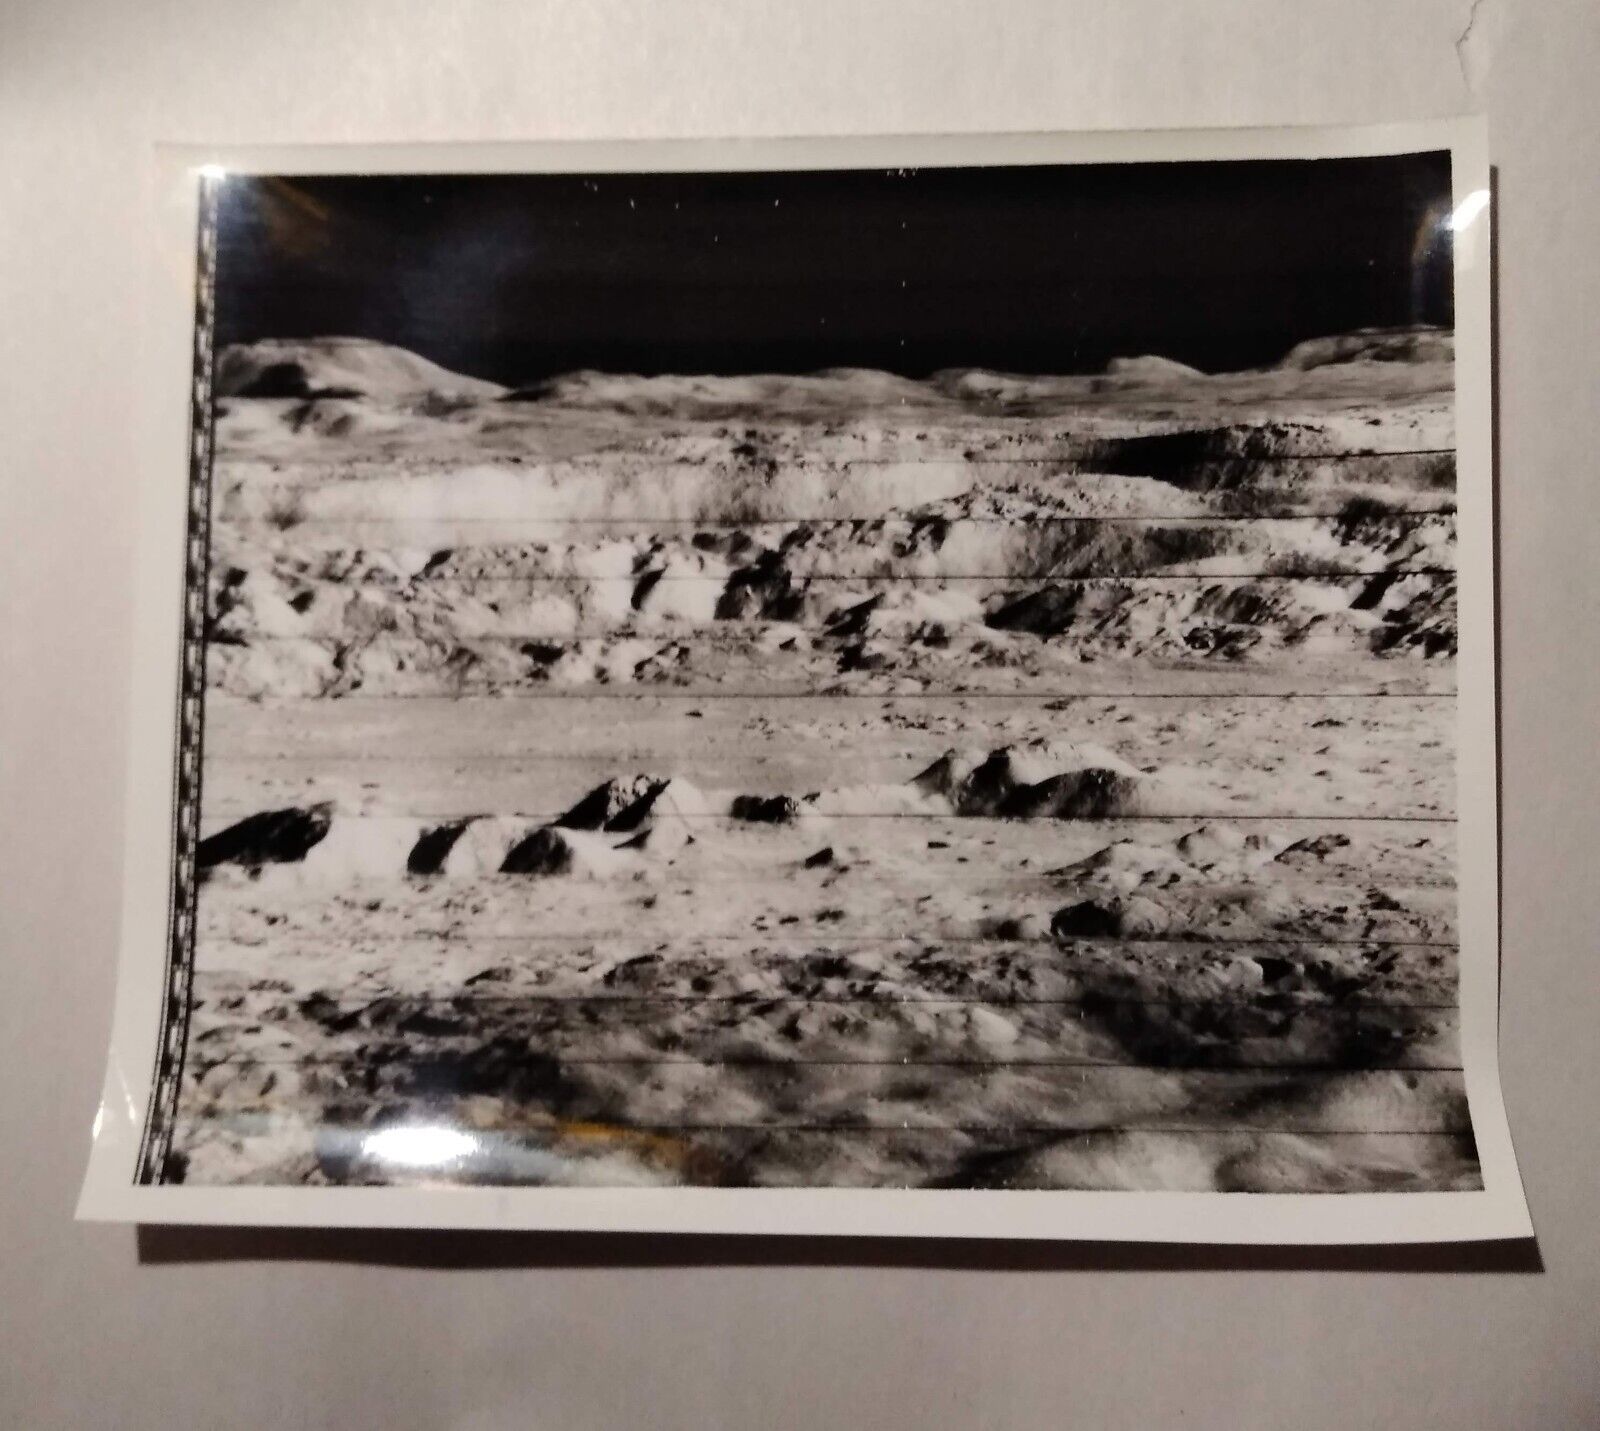 Official NASA Orbiter-2 Lunar Landscape Photo #66-H-1470 Sequence 1966